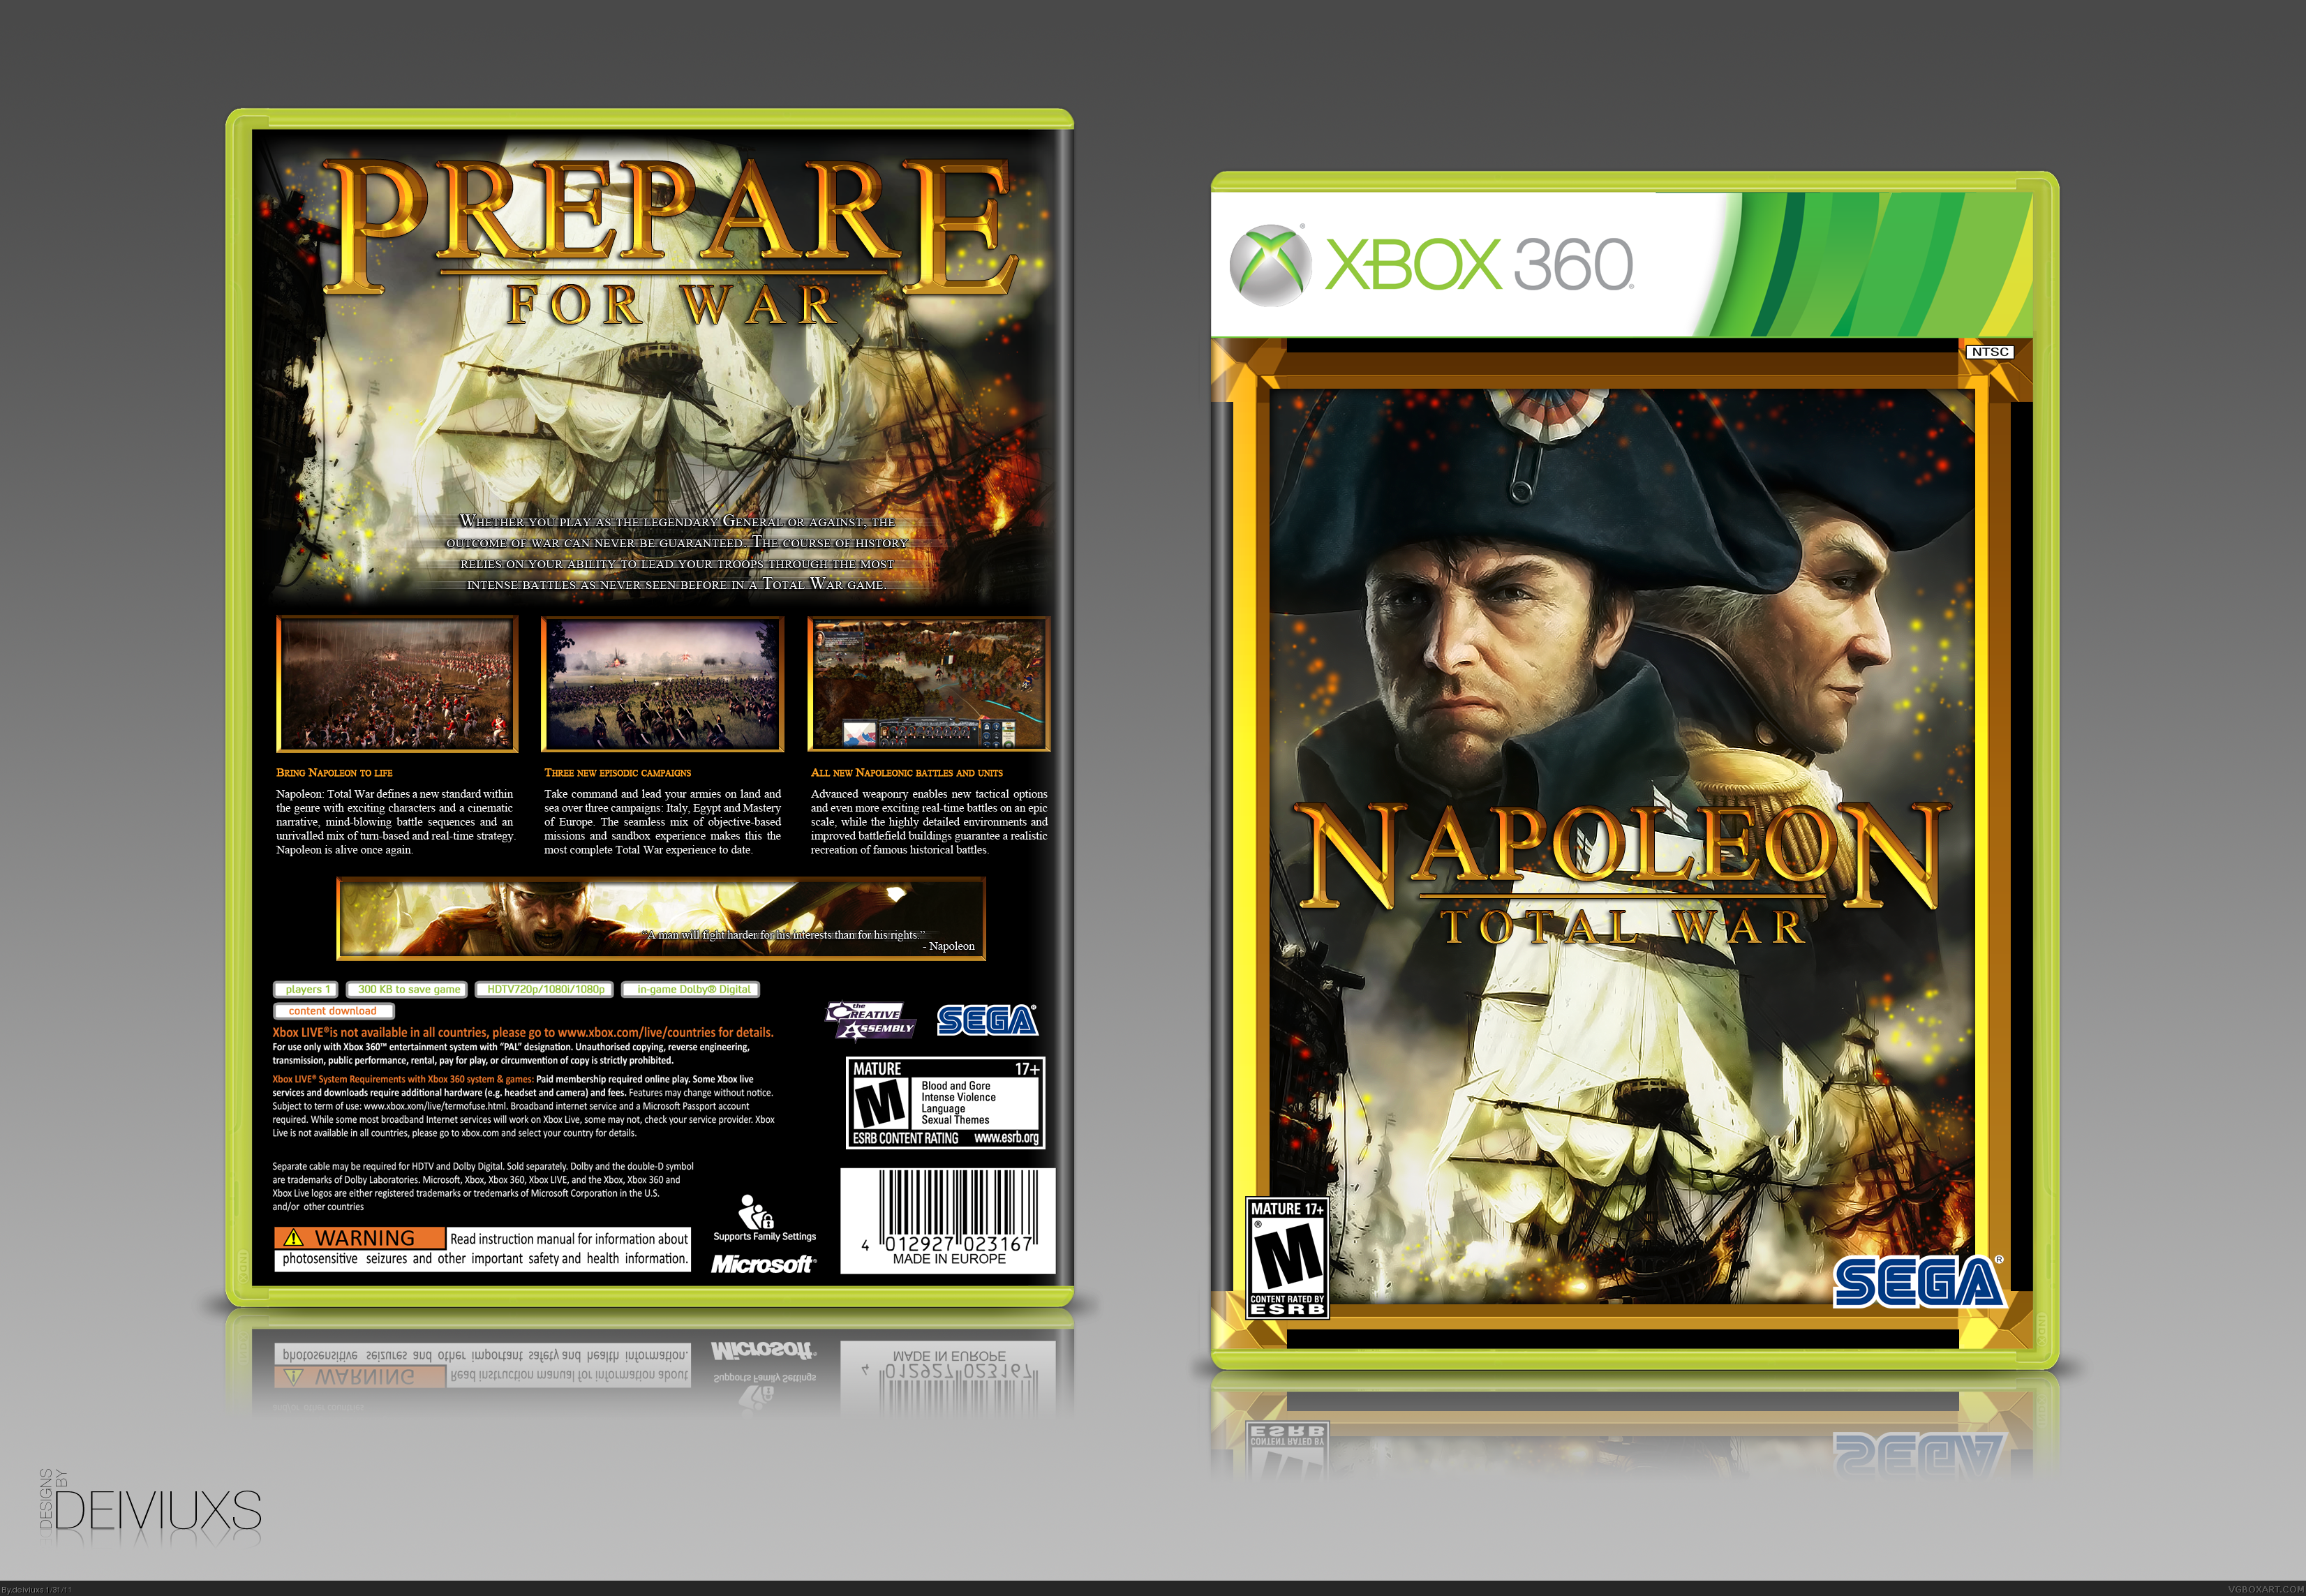 Napoleon: Total War box cover